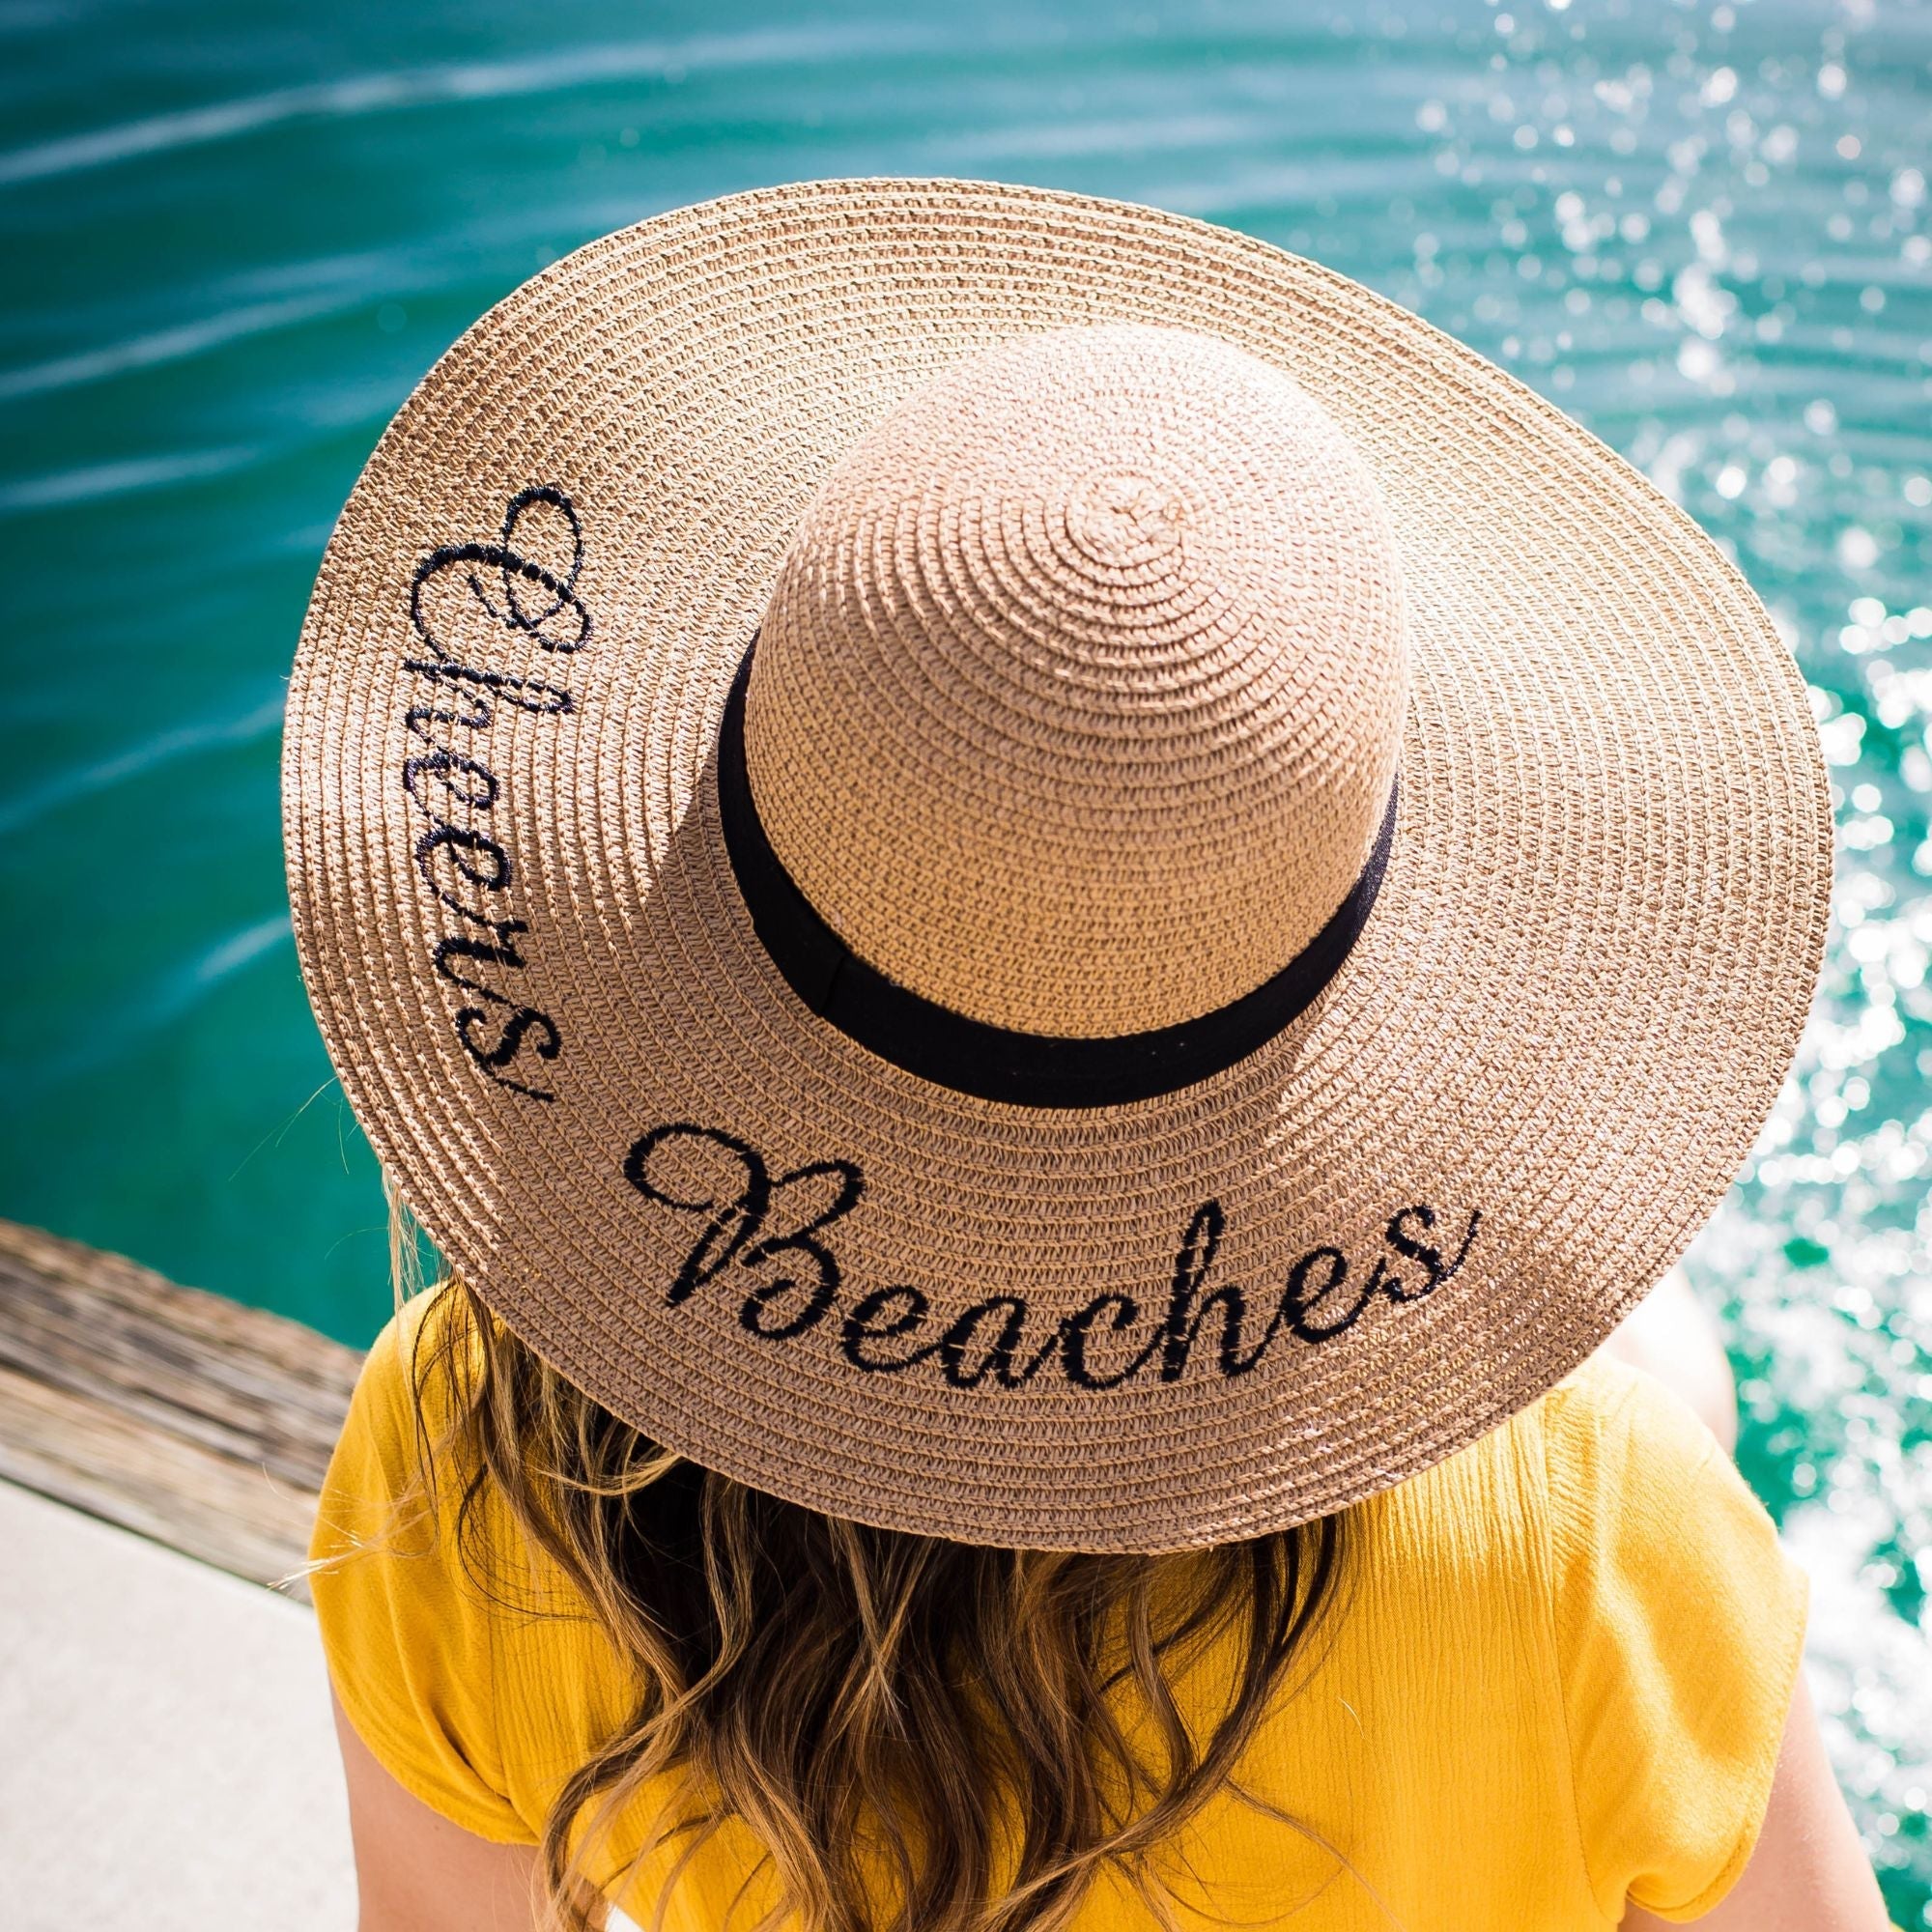 Cheers beaches Floppy Sun Hat: Tan